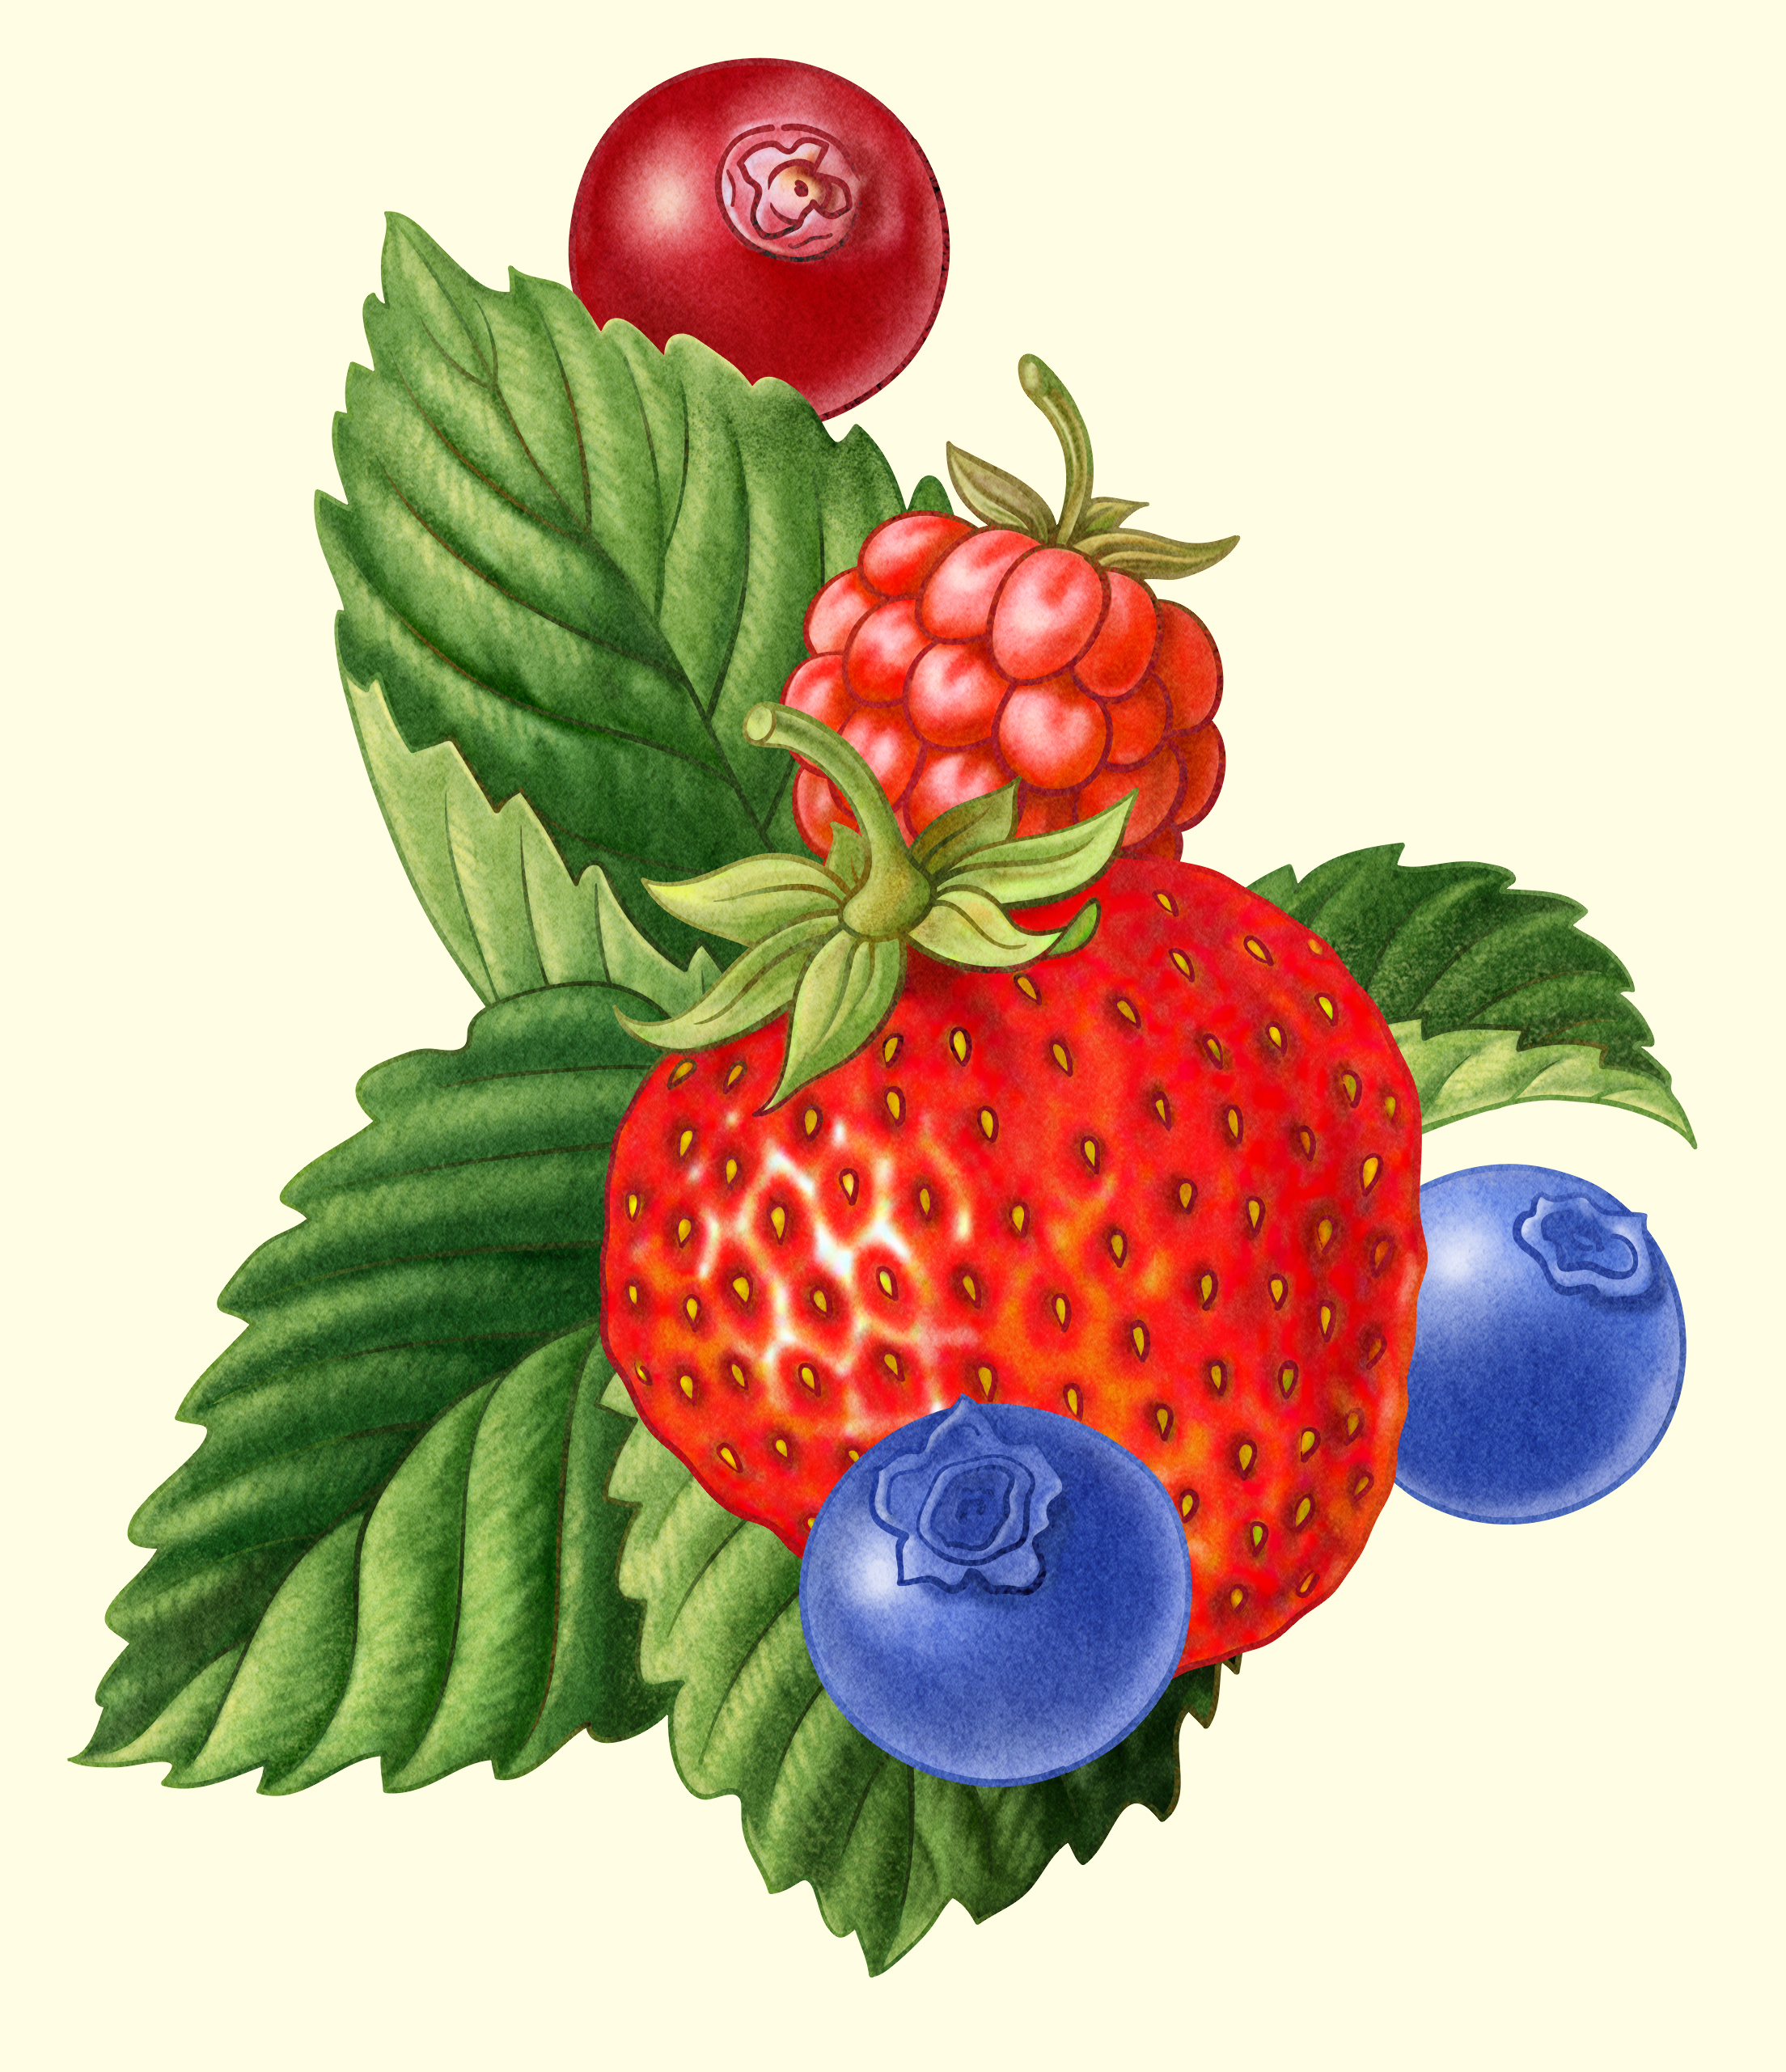 Illustration for a label Kolonihagen Yoghurt Strawberry, blueberry and lingonberry.